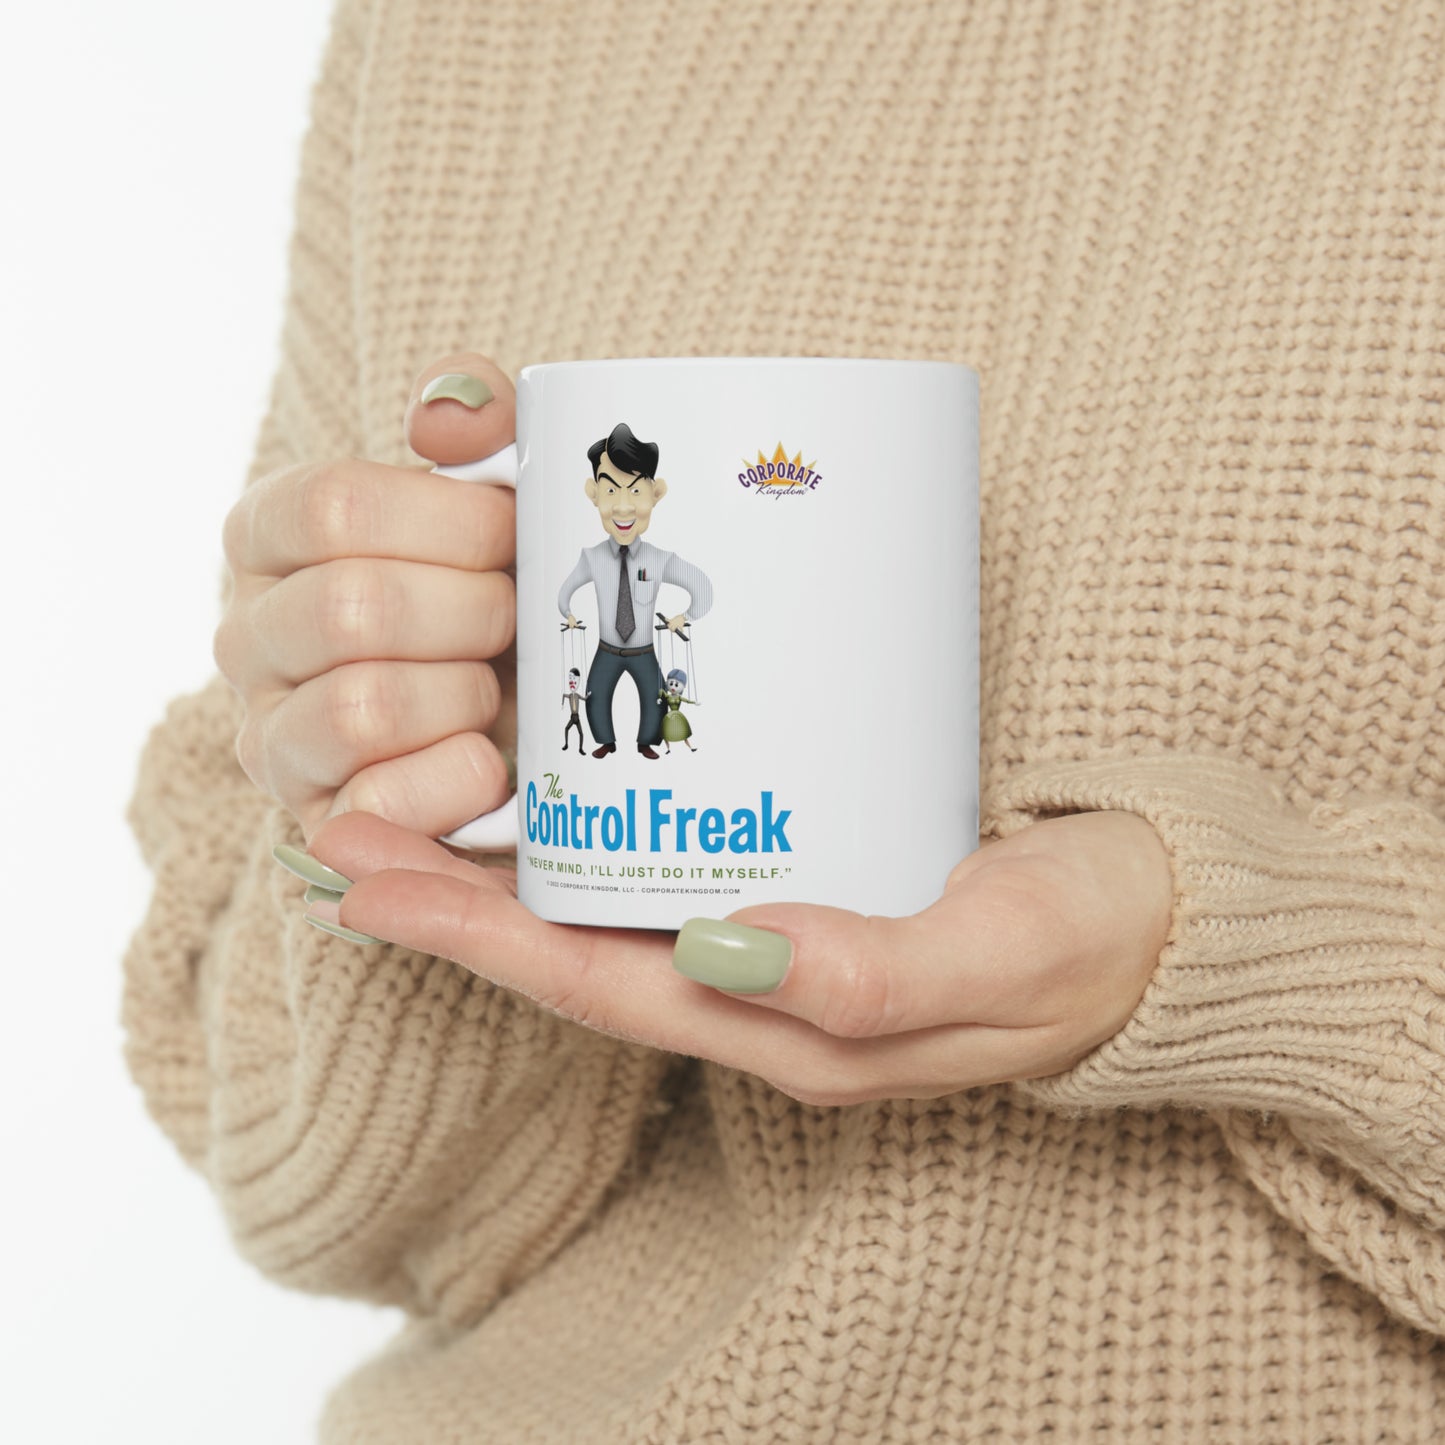 Control Freak Coffee Mug by Corporate Kingdom®